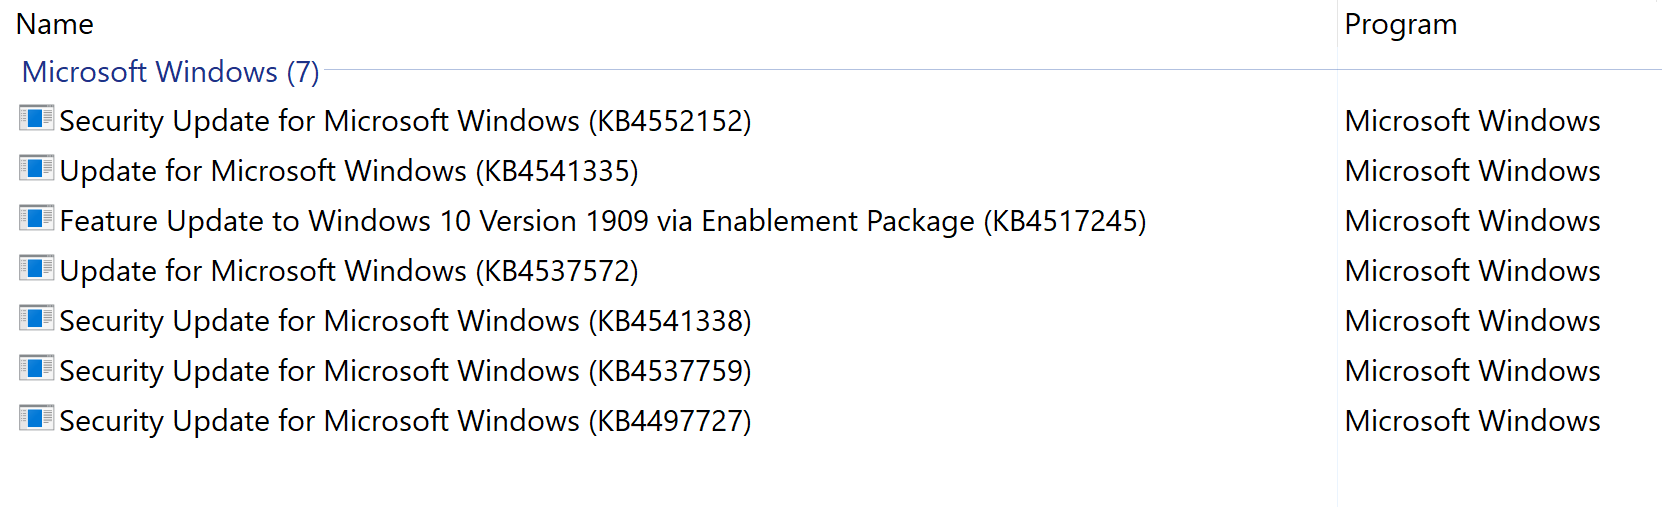 Windows Sandbox Failed To Start 3b18e441-eec8-4074-a855-fbee02f49ac0?upload=true.png